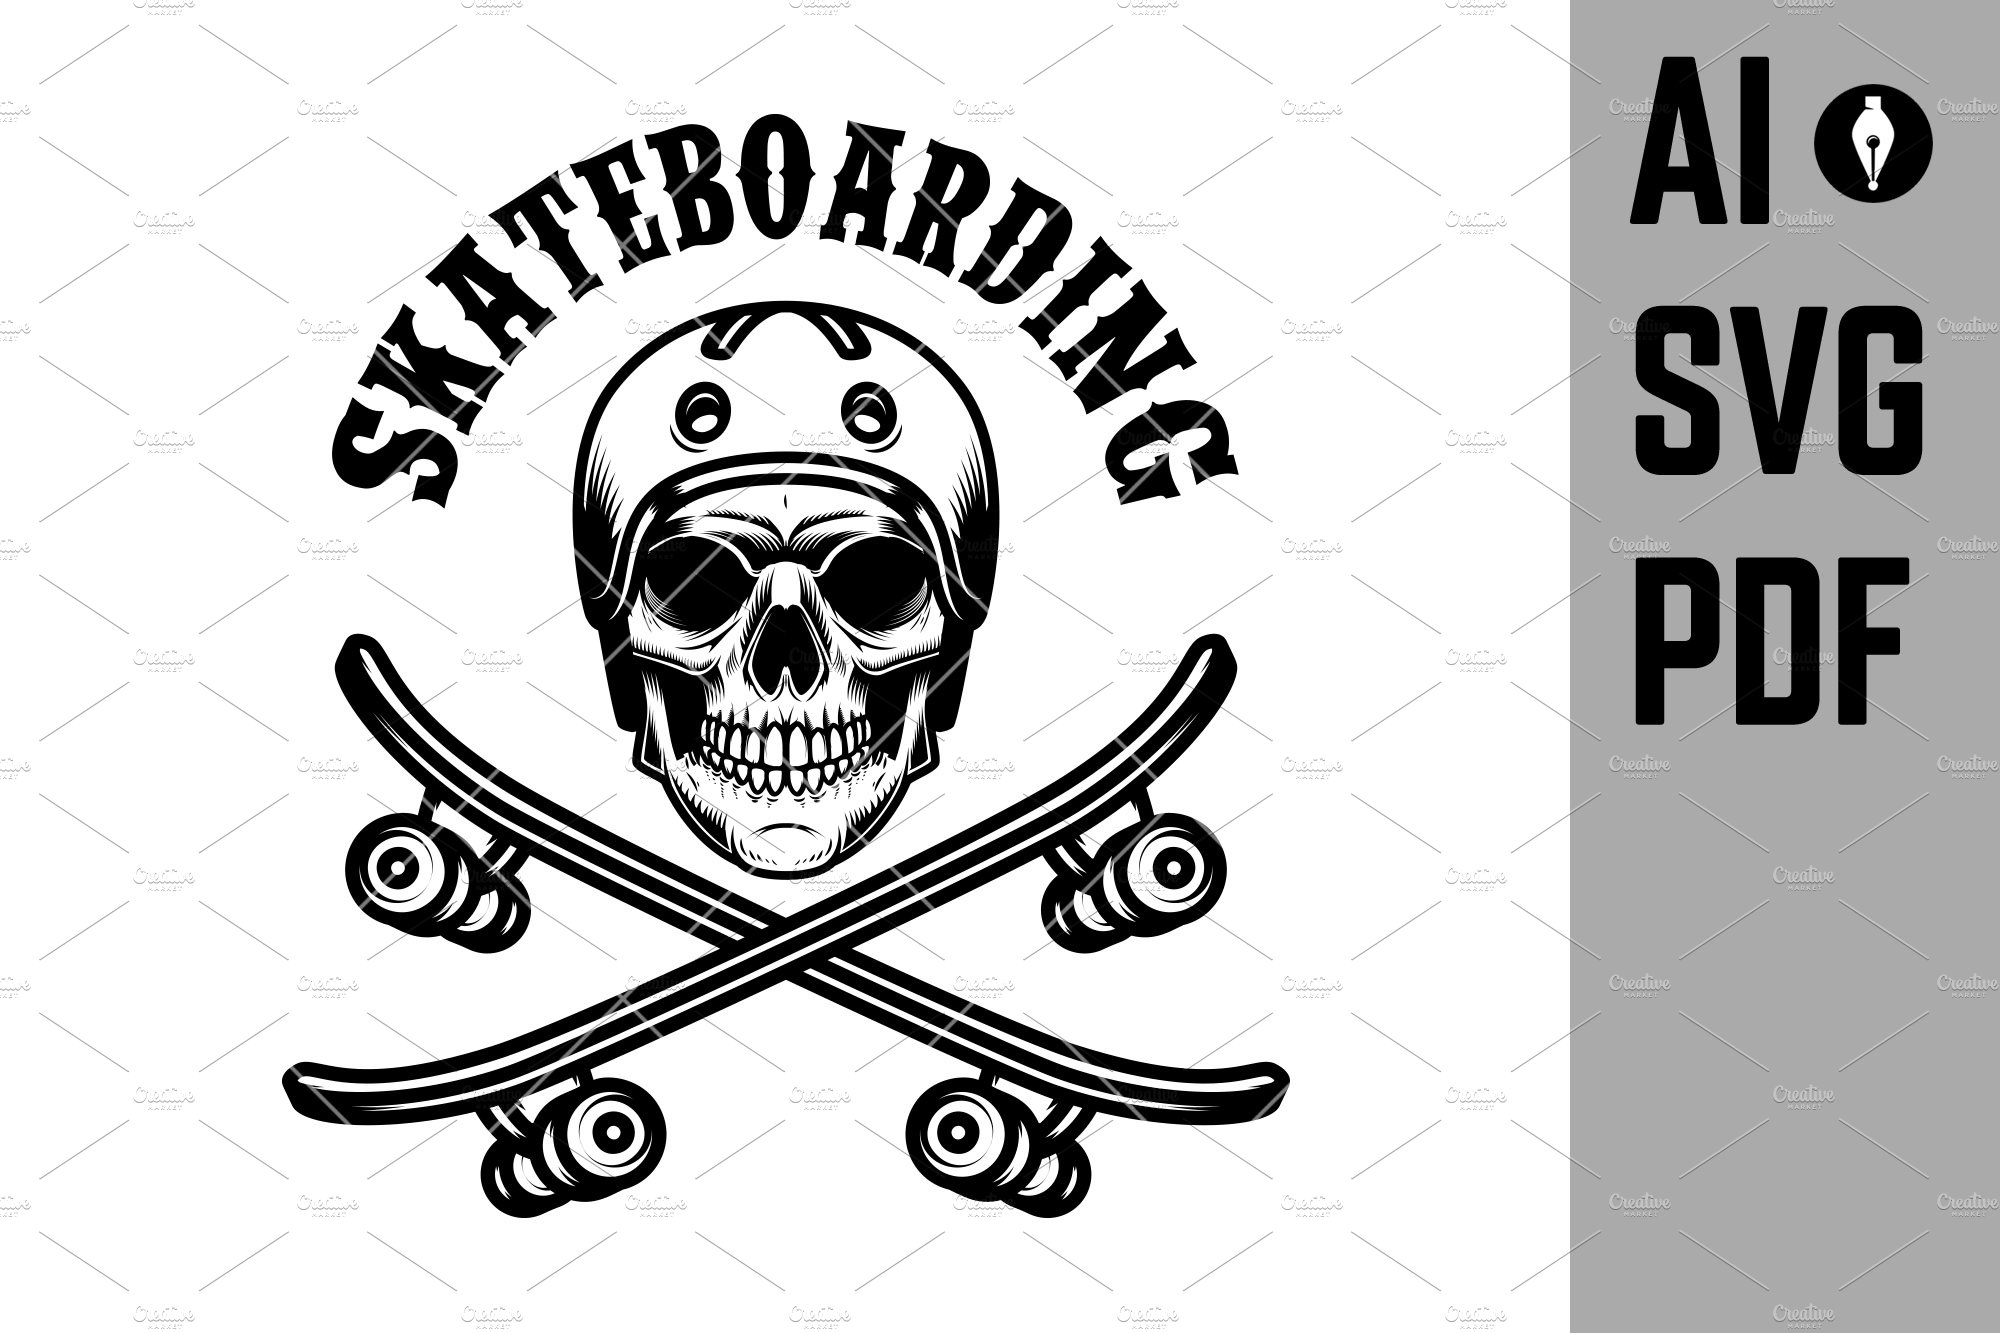 Skateboarder skull with skateboards cover image.